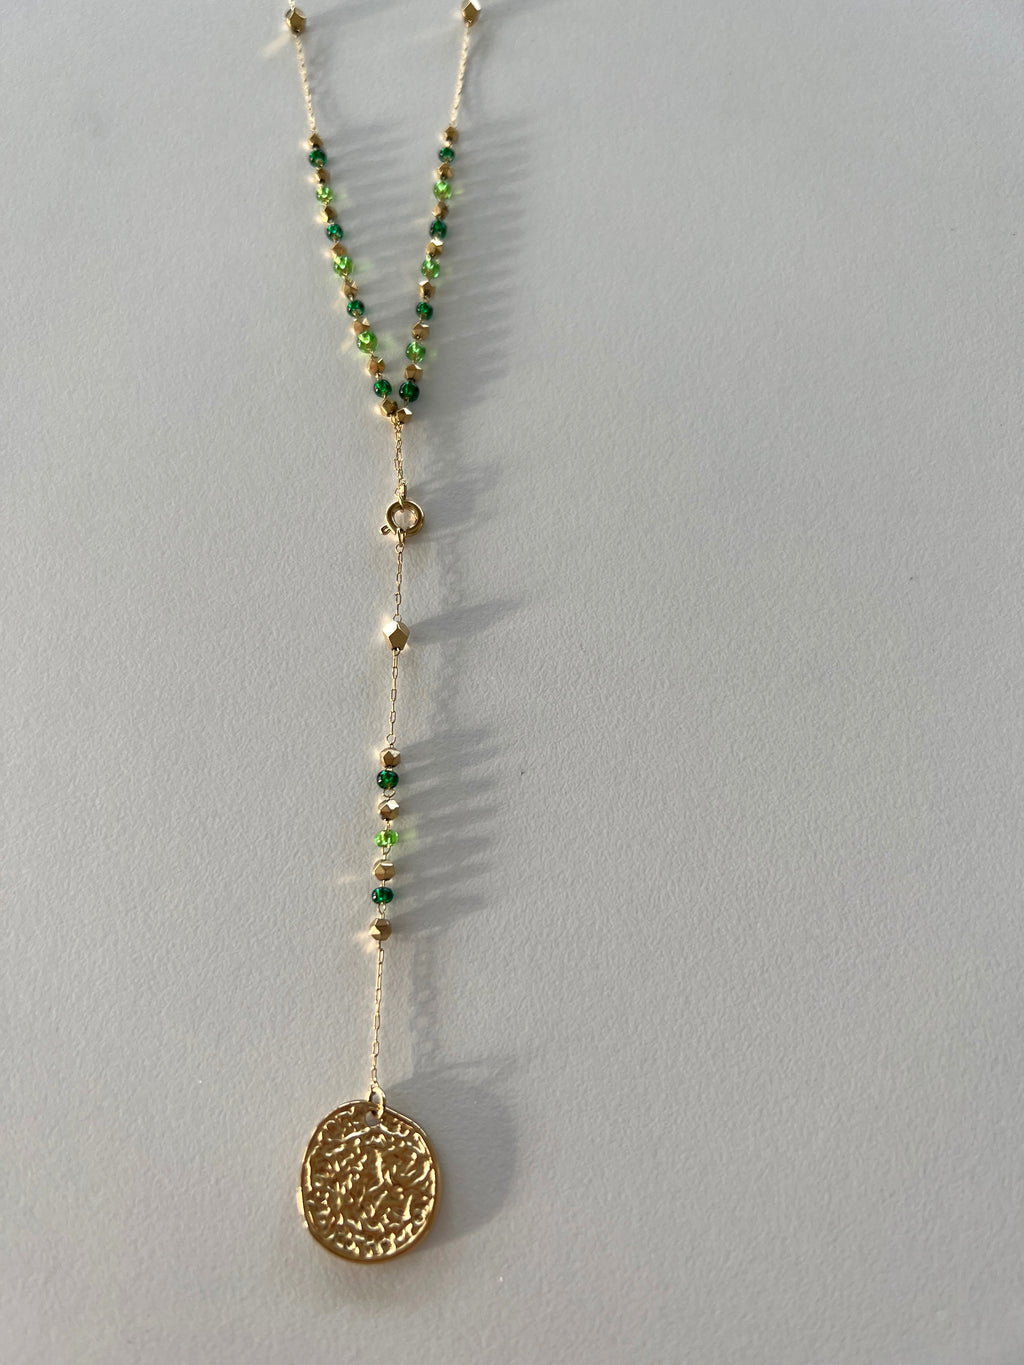 Sega necklace - Golden and green